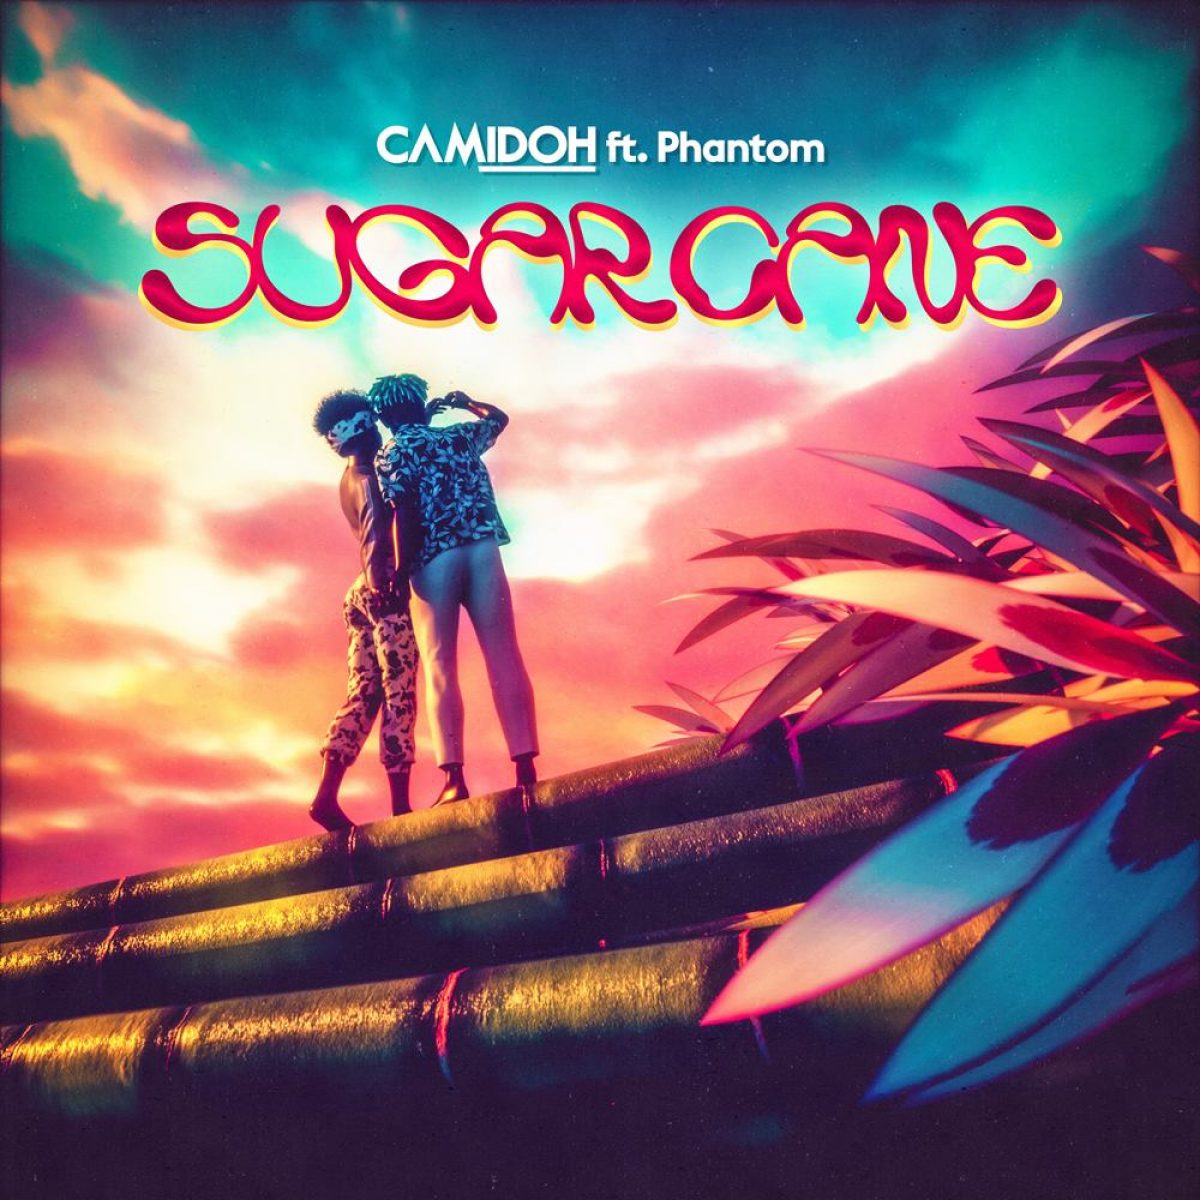  Camidoh – Sugarcane mp3 download